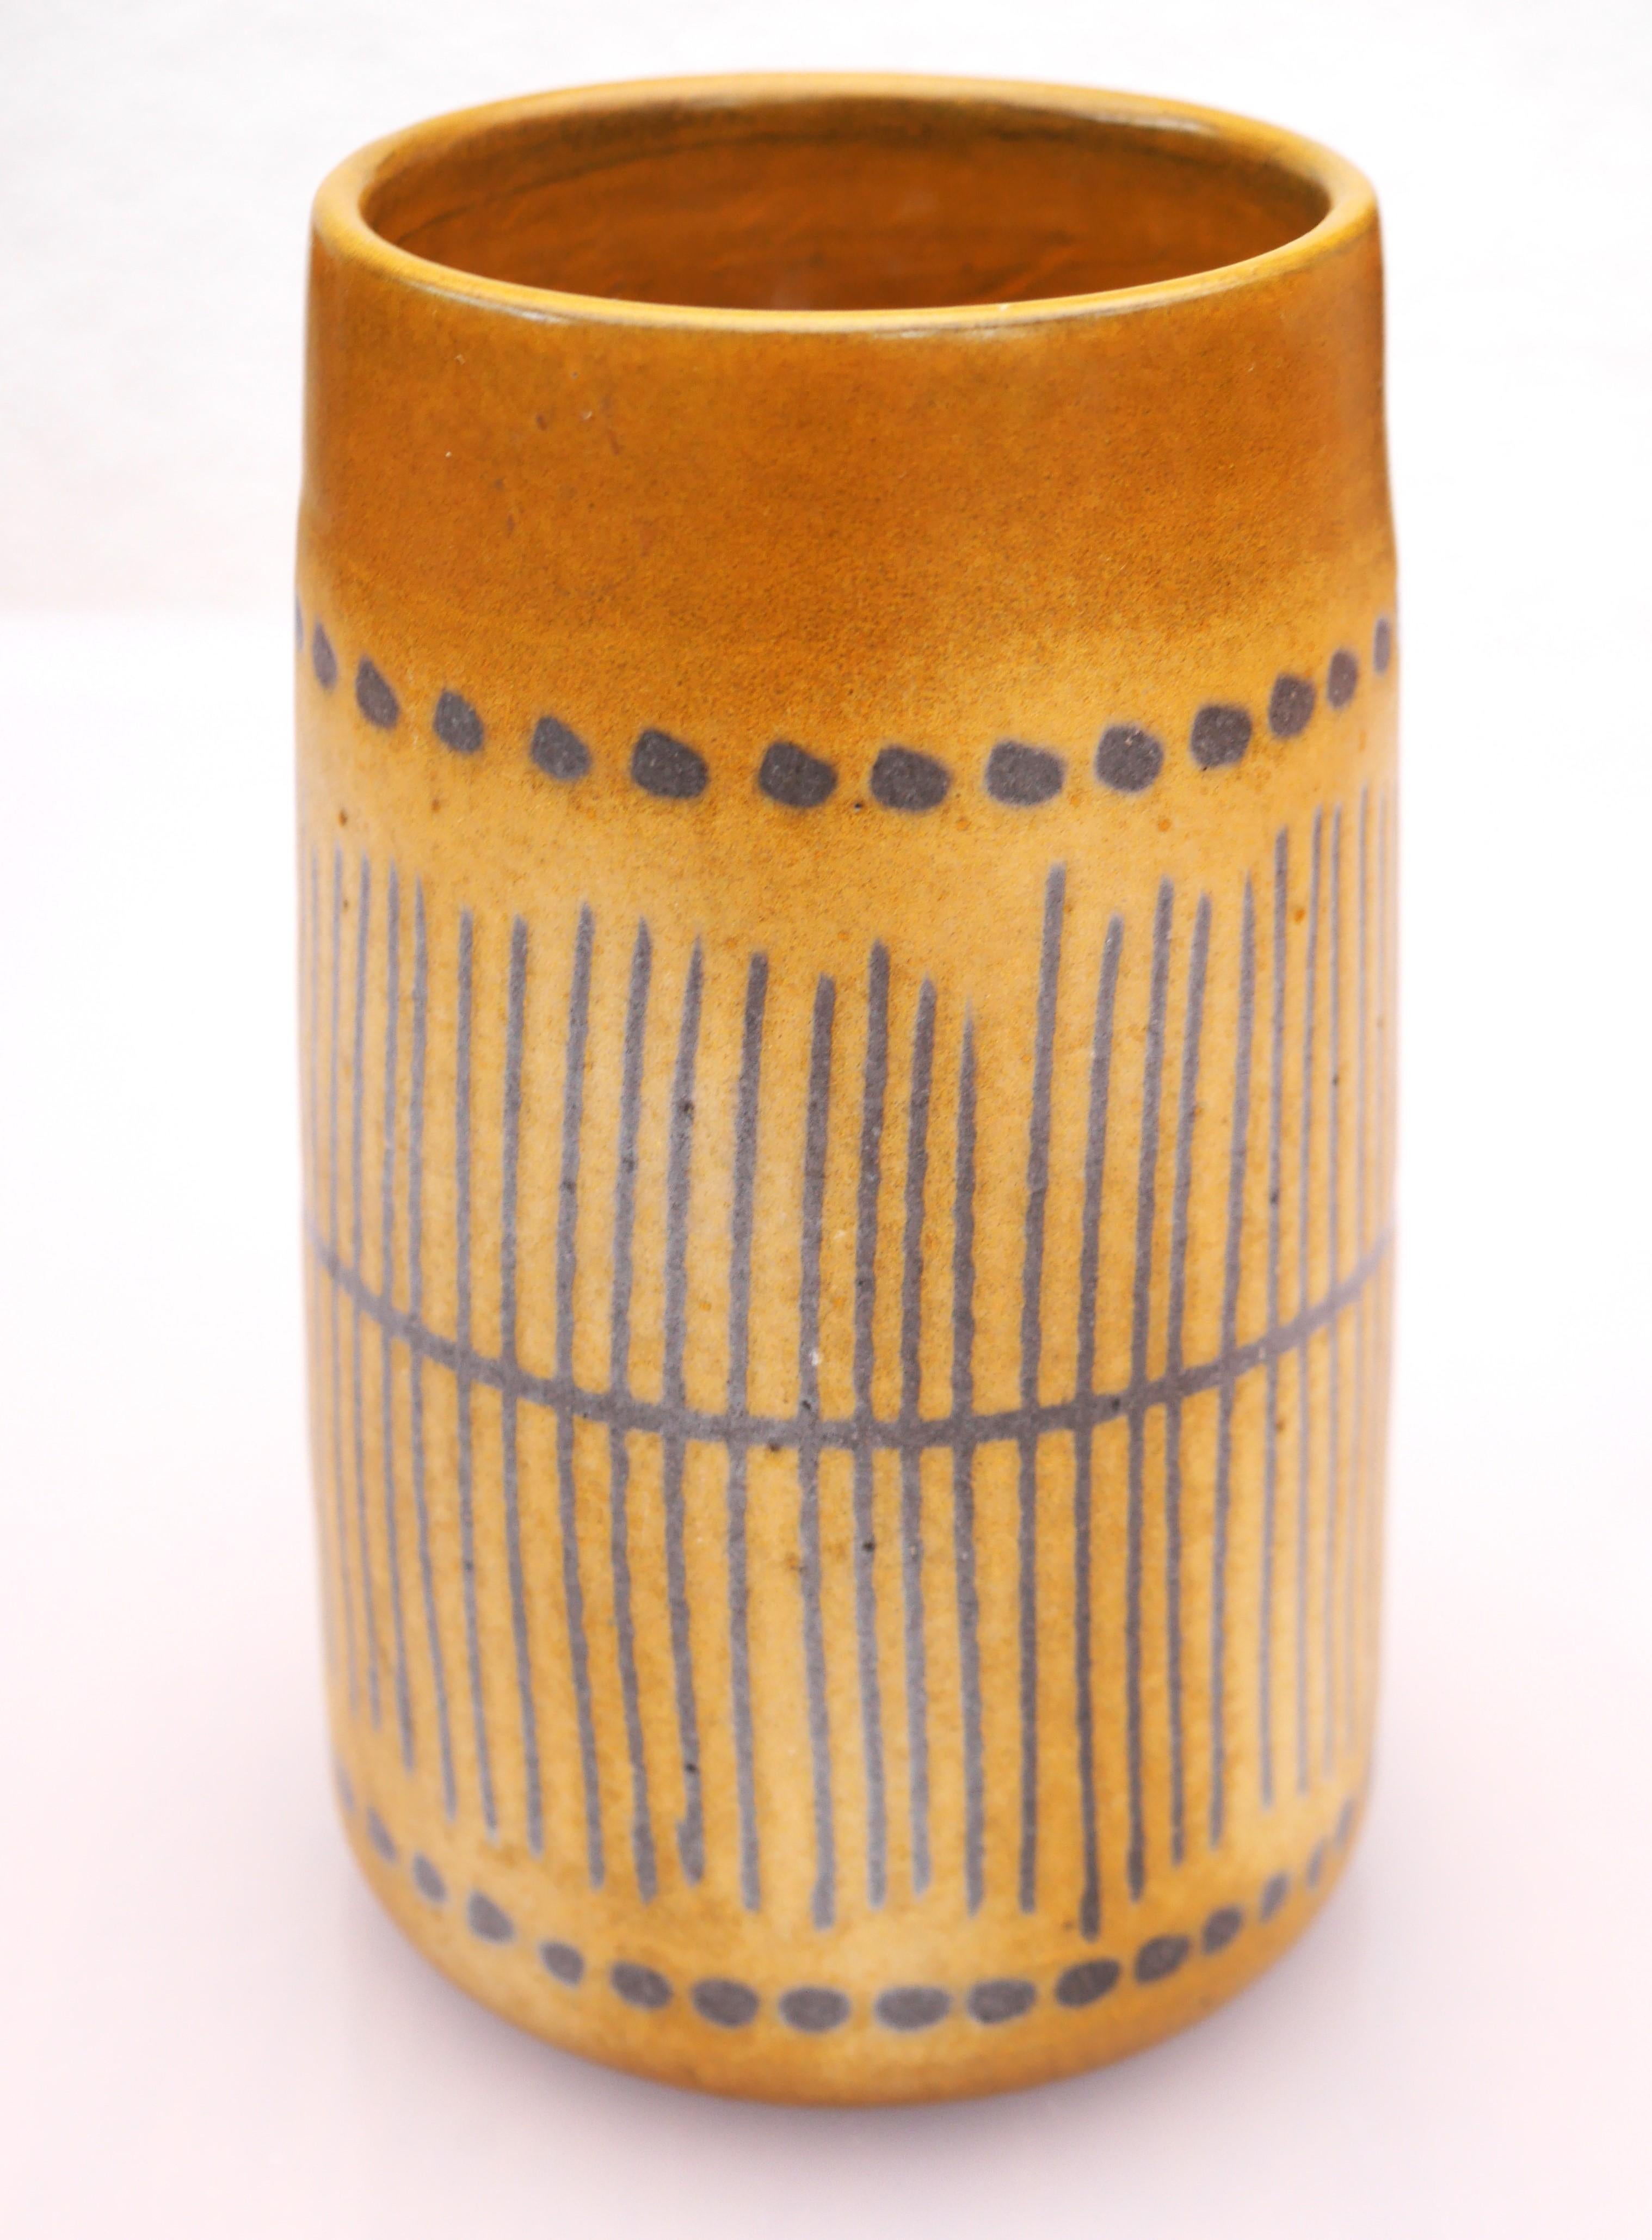 A fantastic vintage handmade ceramic vase from the 